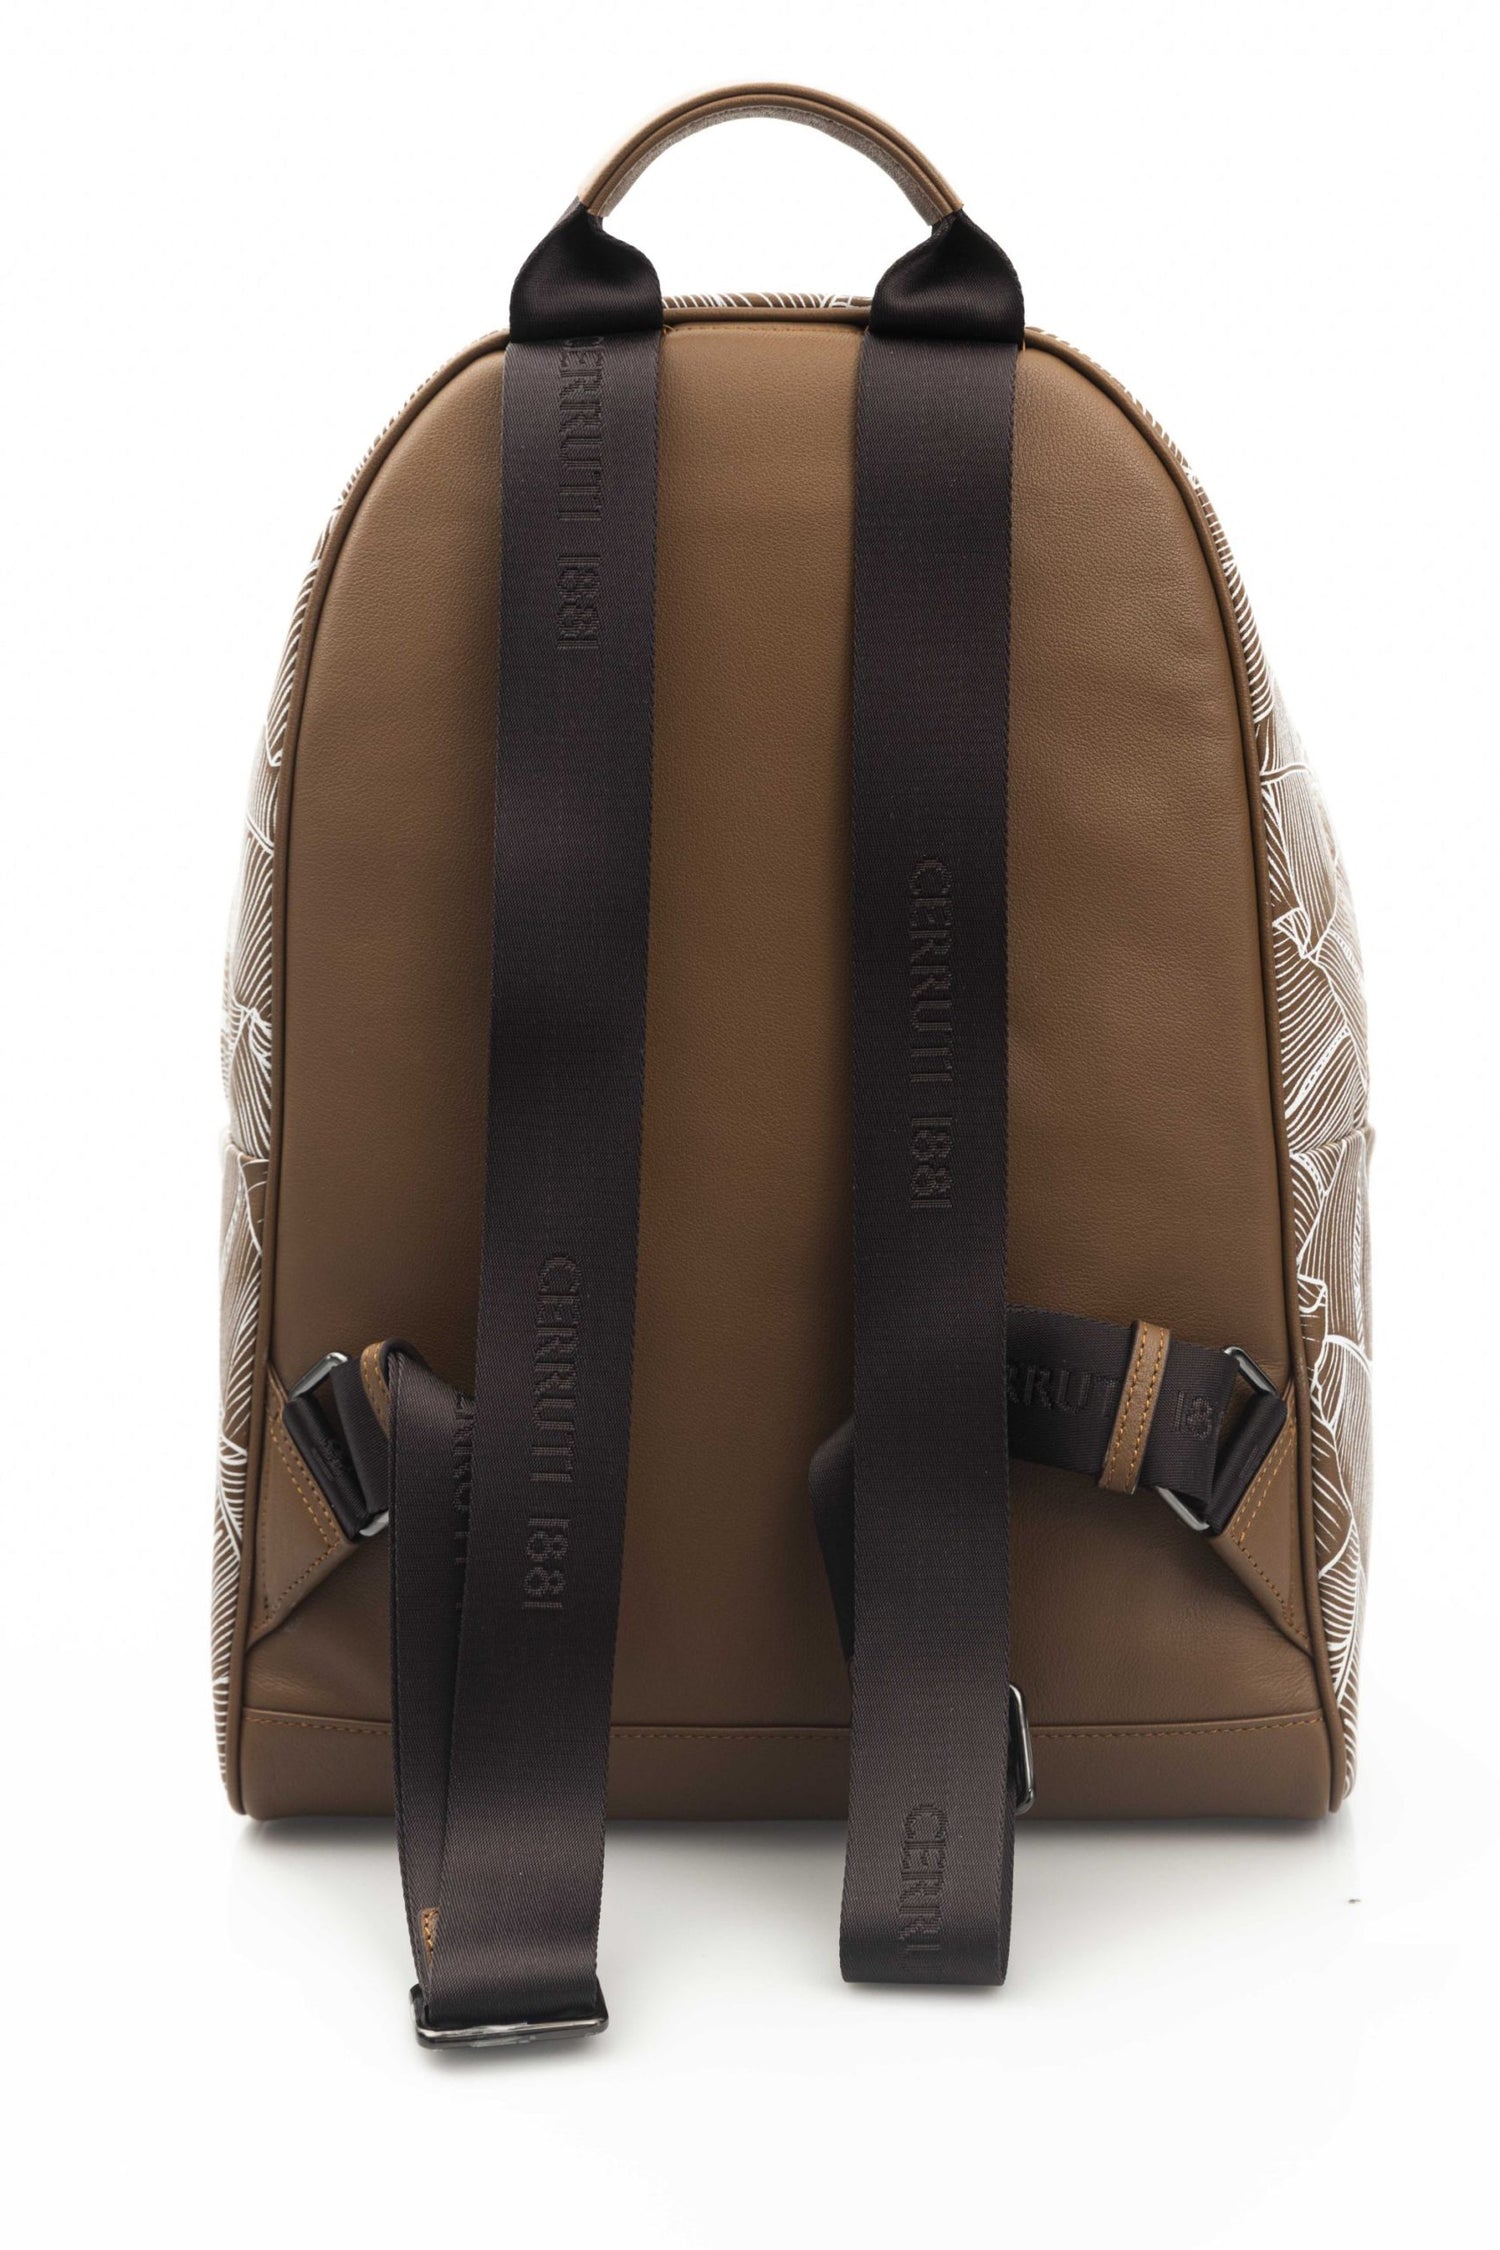 Cerruti 1881 Brown Leather Backpack - DEA STILOSA MILANO